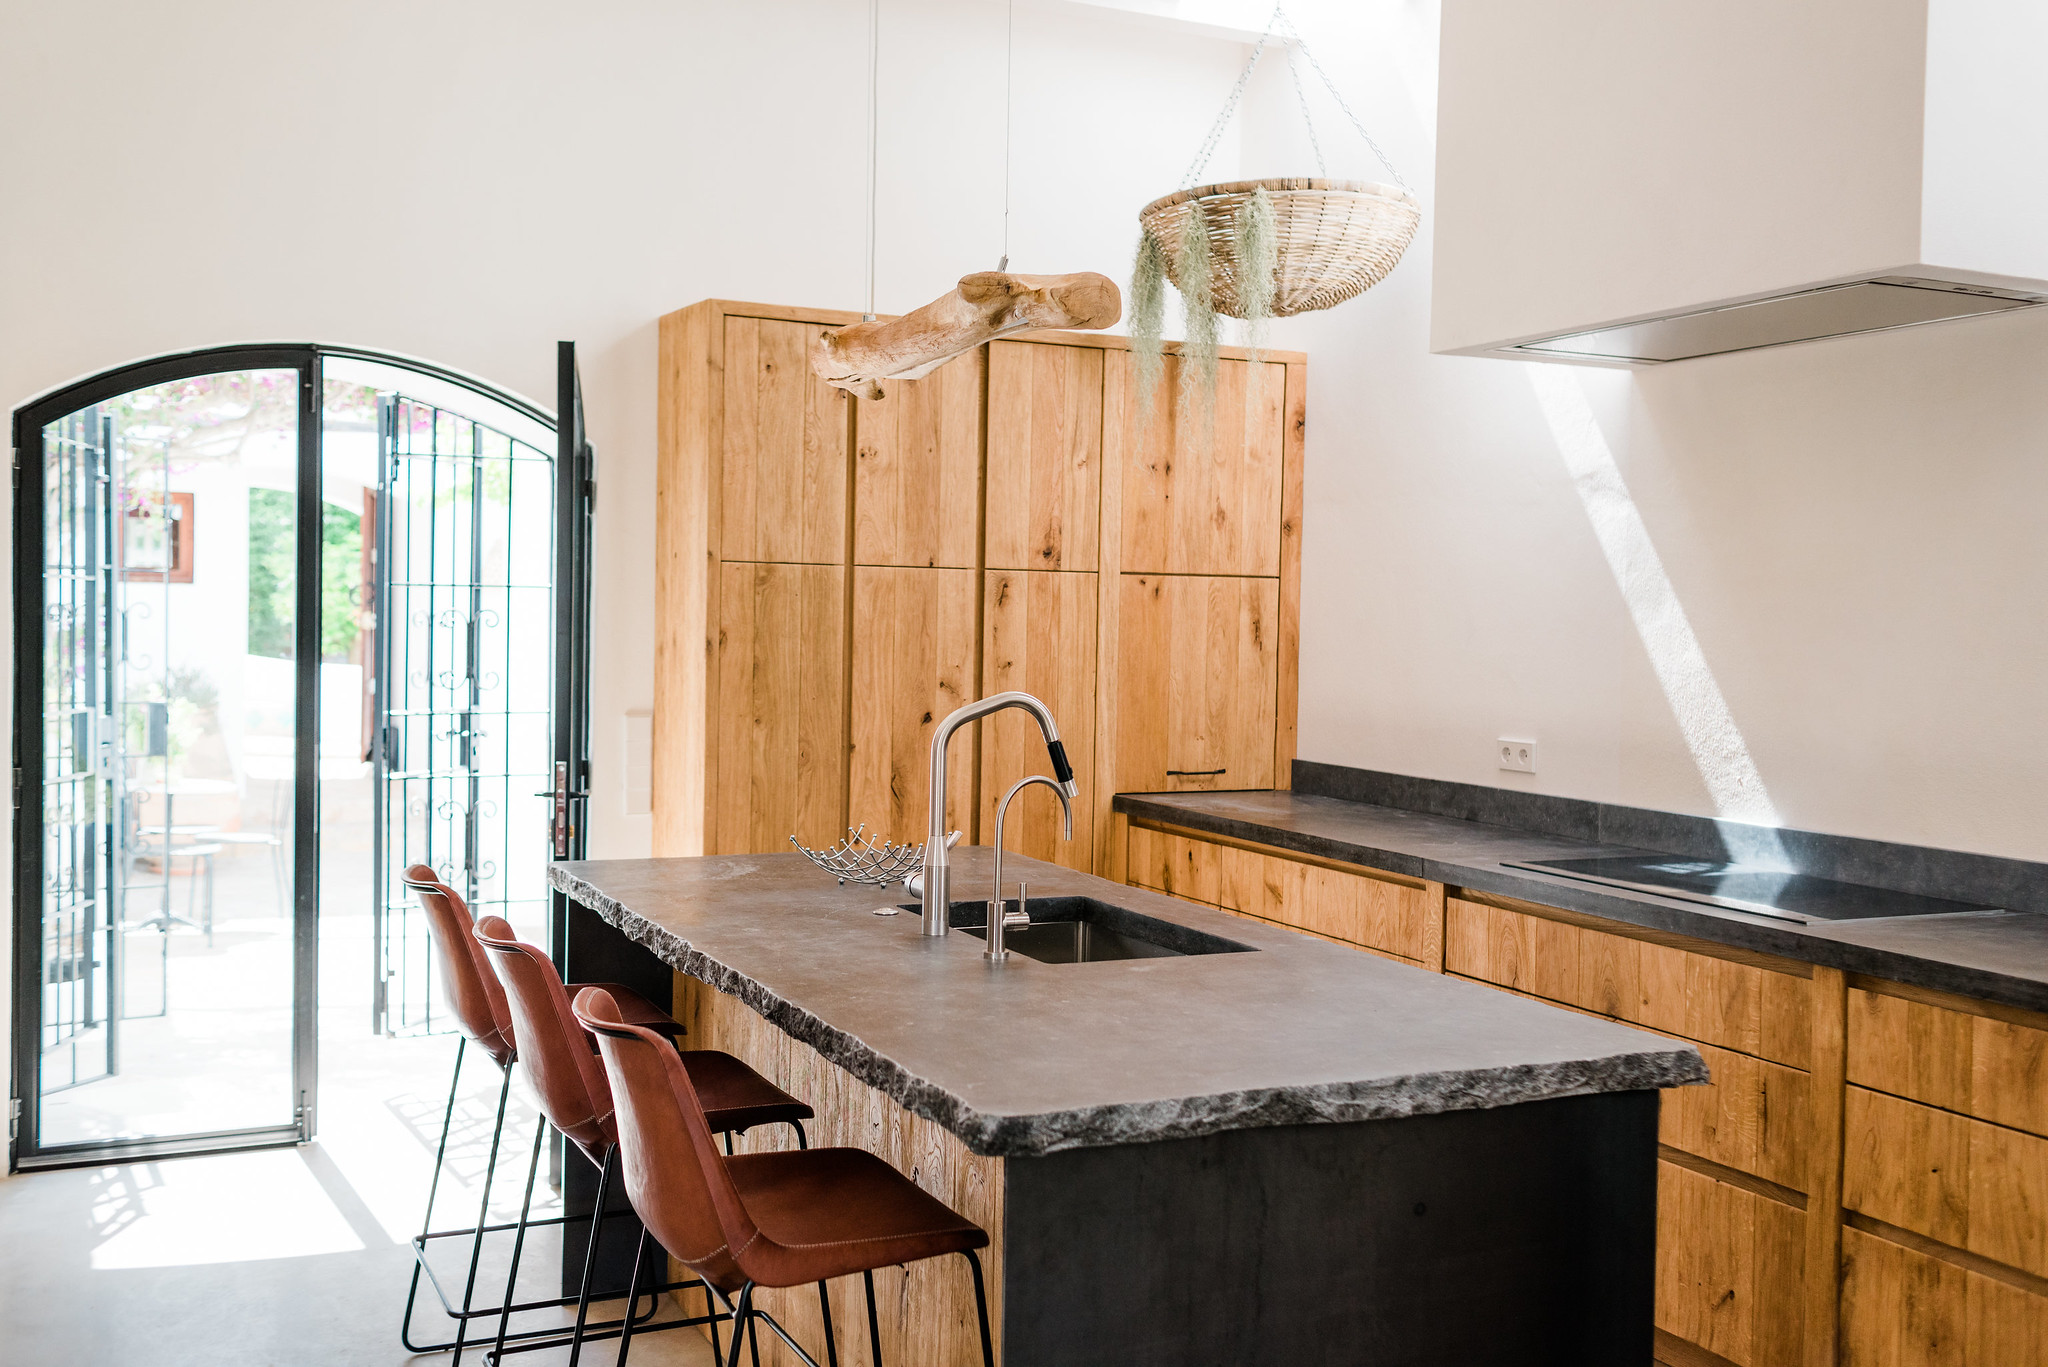 https://www.white-ibiza.com/wp-content/uploads/2020/06/white-ibiza-villas-can-calma-interior-kitchen.jpg